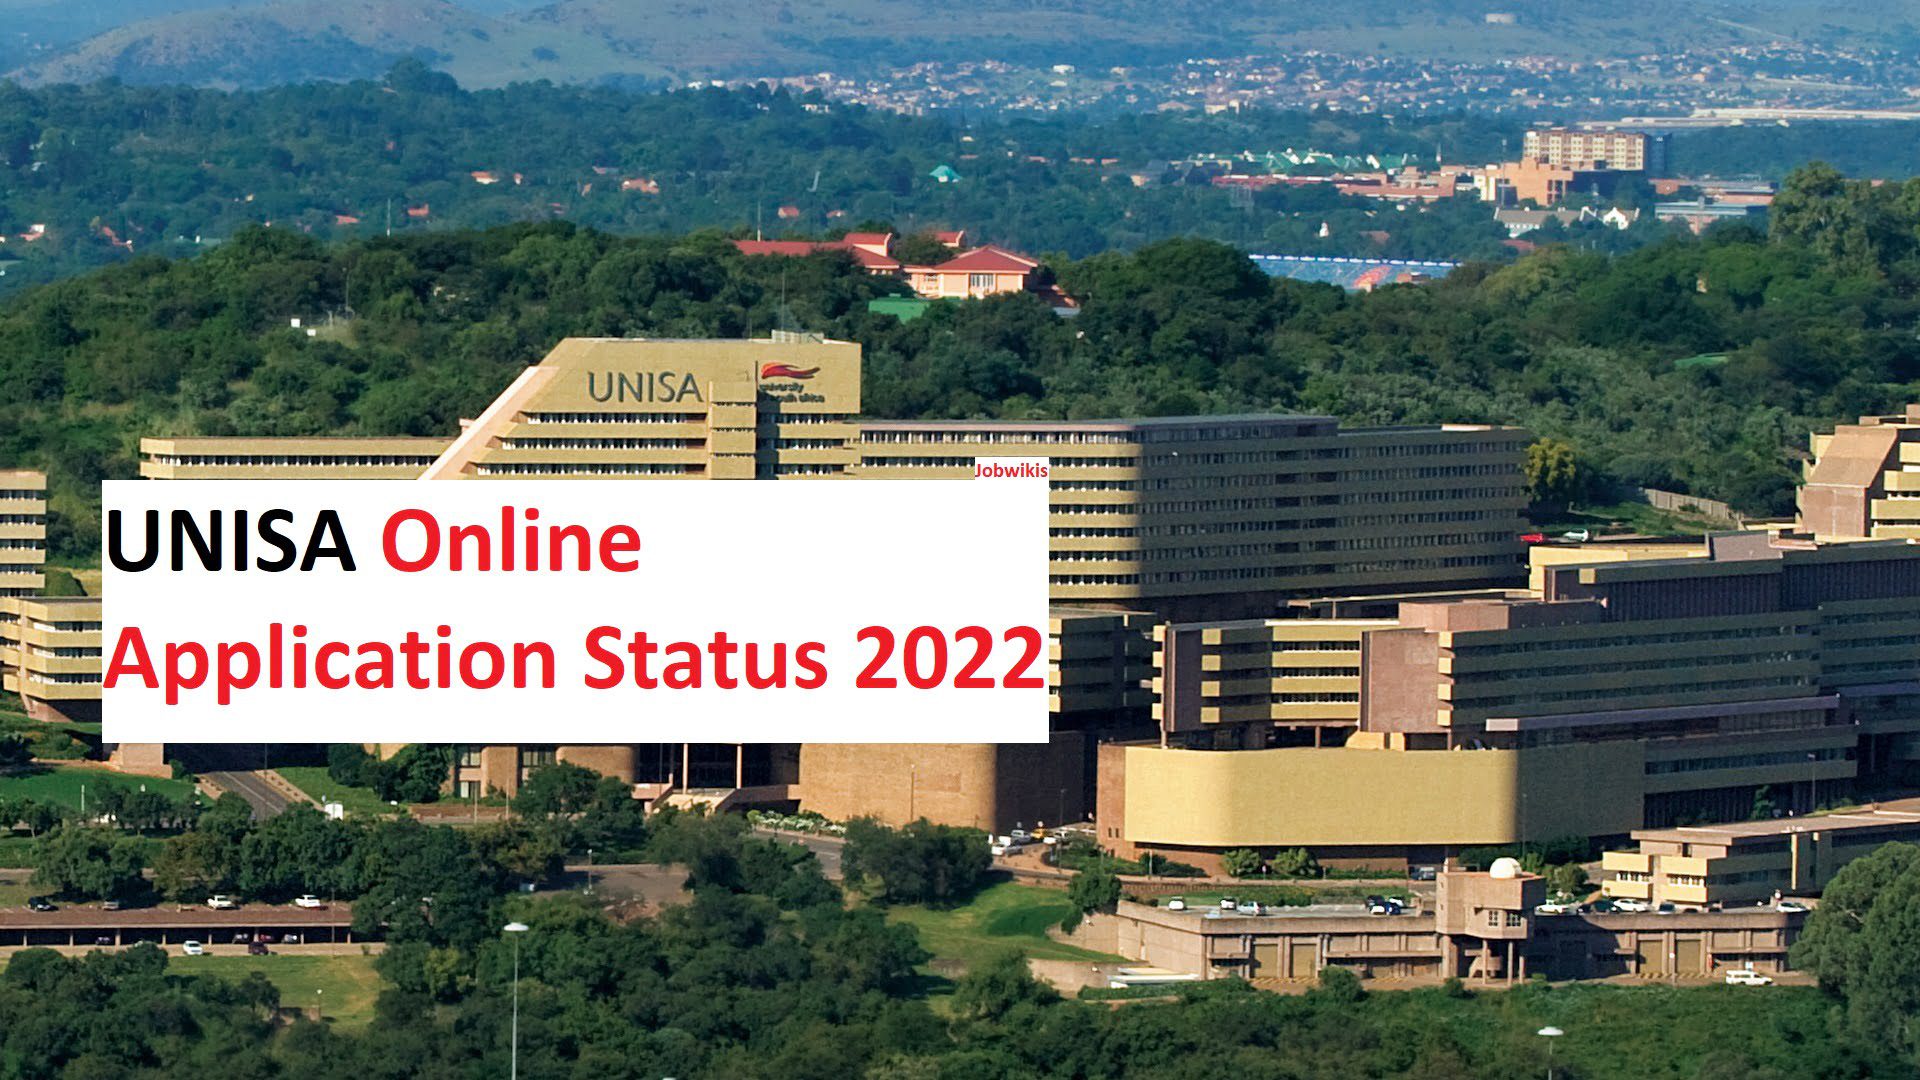 University of South Africa, UNISA Online Application Status,www.unisa.ac.za Application Status, UNISA Online Application Status Portal, My UNISA application portal